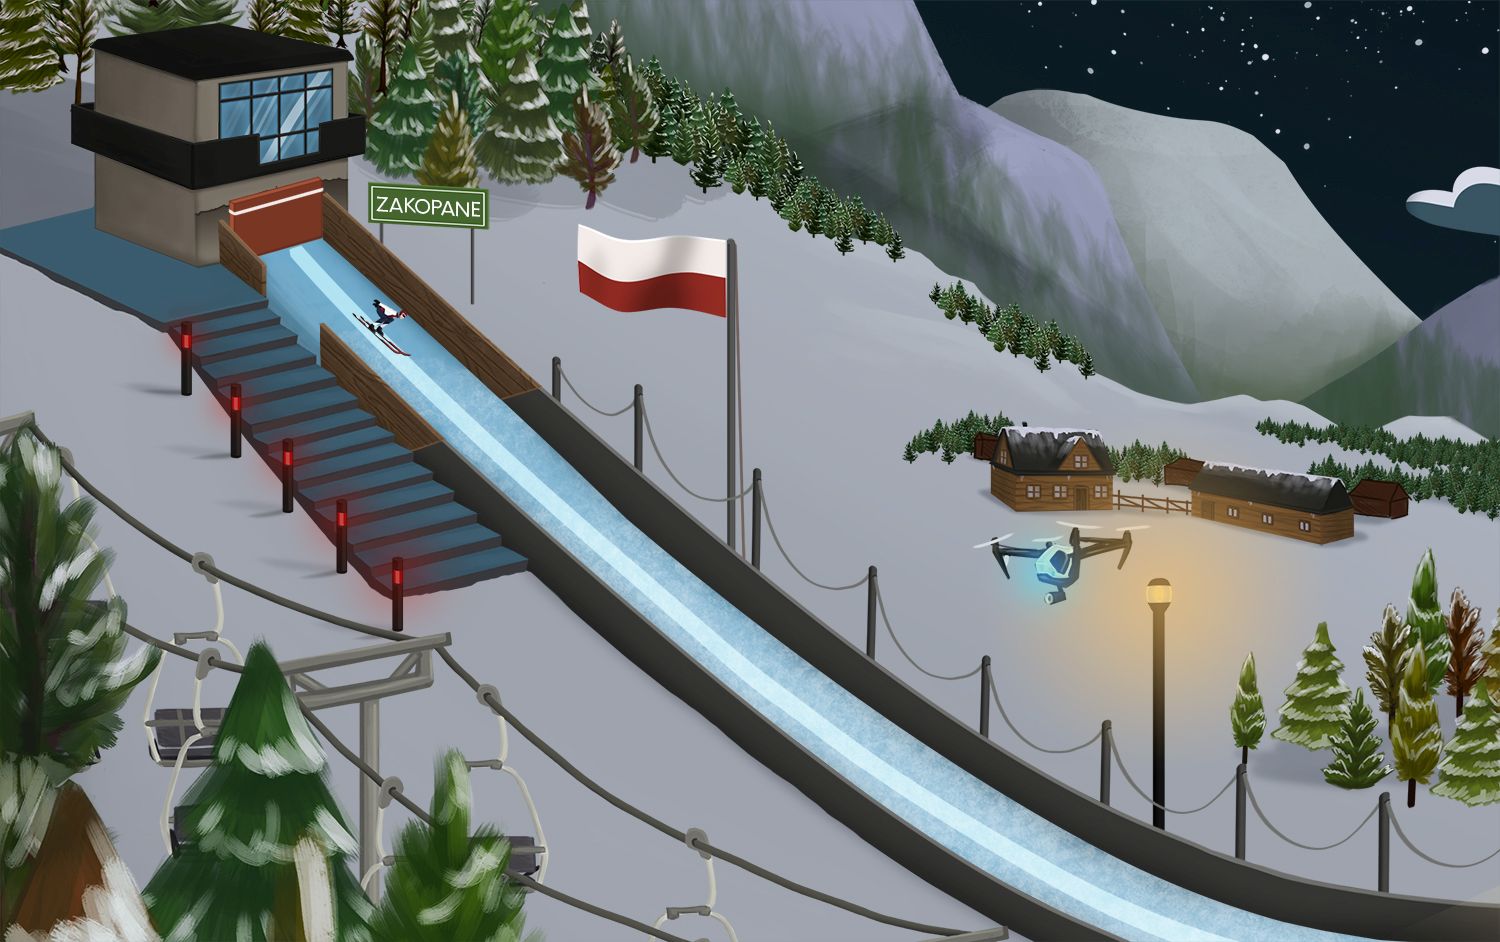 Ski Jump Simulator - skoki narciarskie gra online